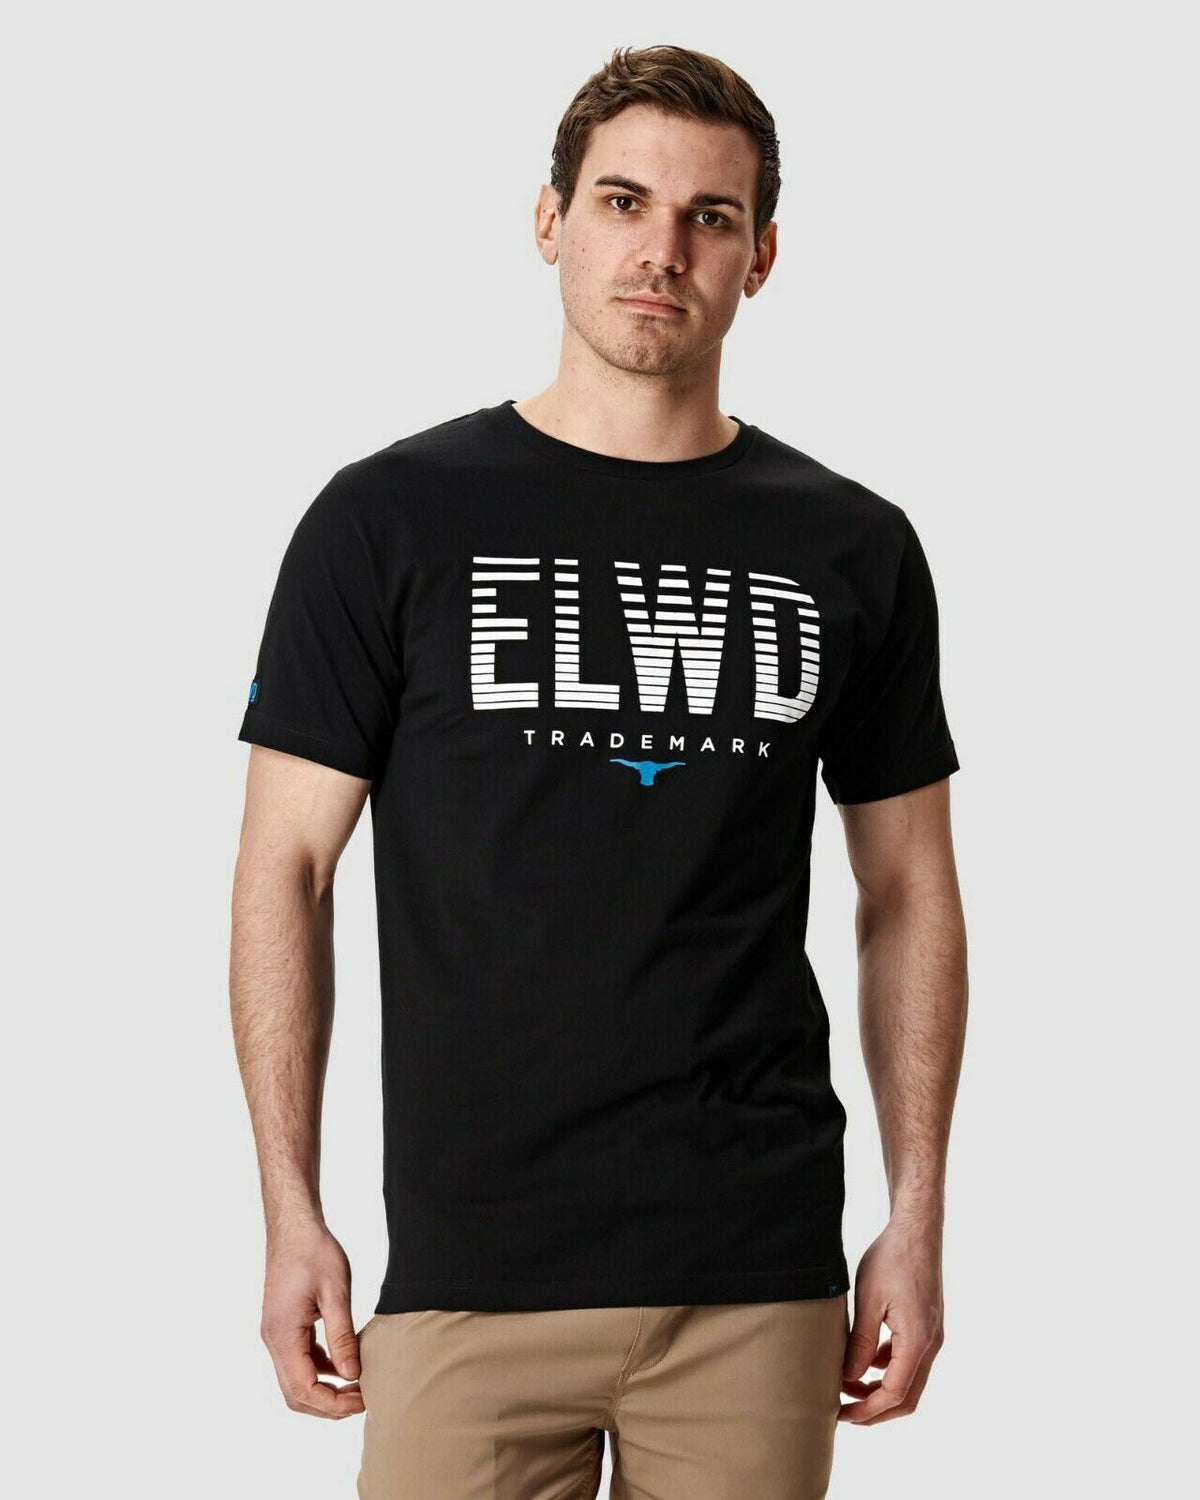 Elwood Mens Slice Tee Cotton Short Sleeve Stretch T-Shirt Work Casual EWD813